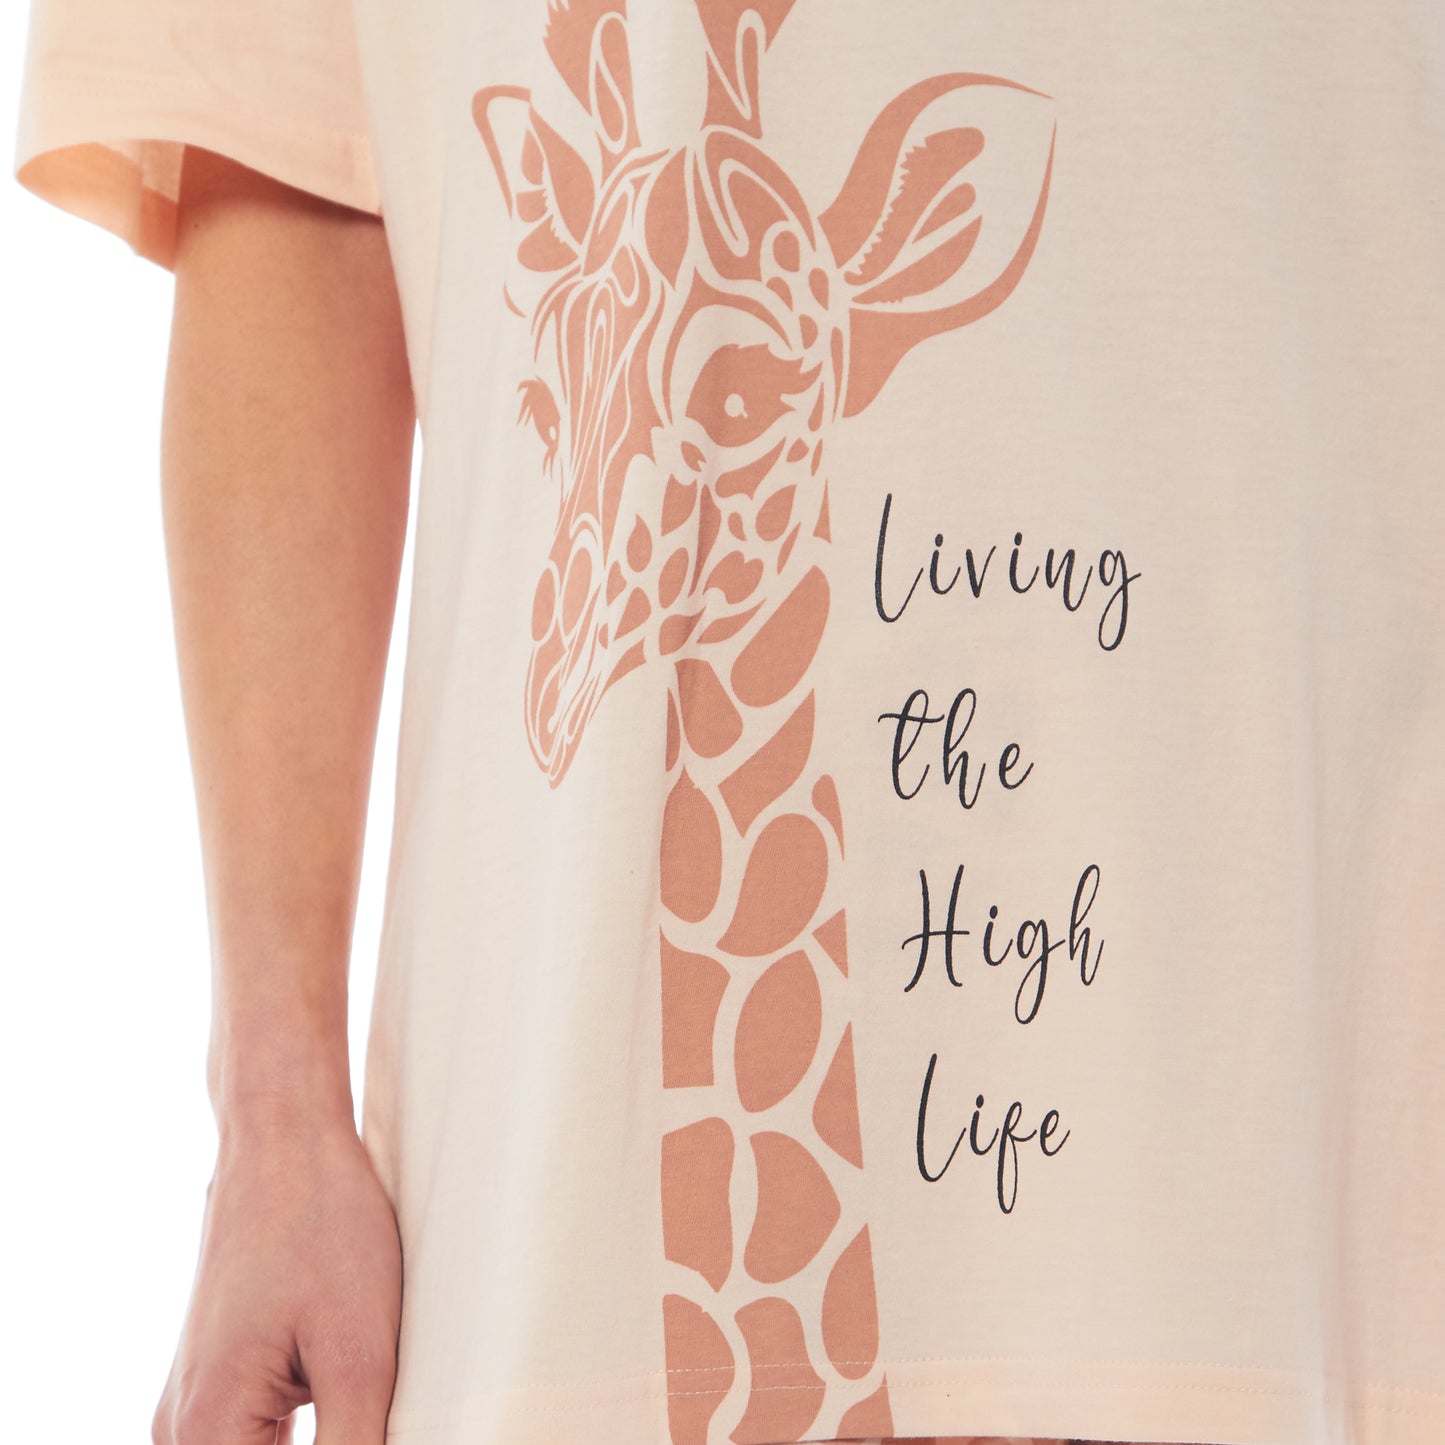 Women's Oversized Cotton T Shirt & Leggings PJ Set, Ladies Loungewear Sleepwear, Giraffe Zebra Printed Pyjama Designs